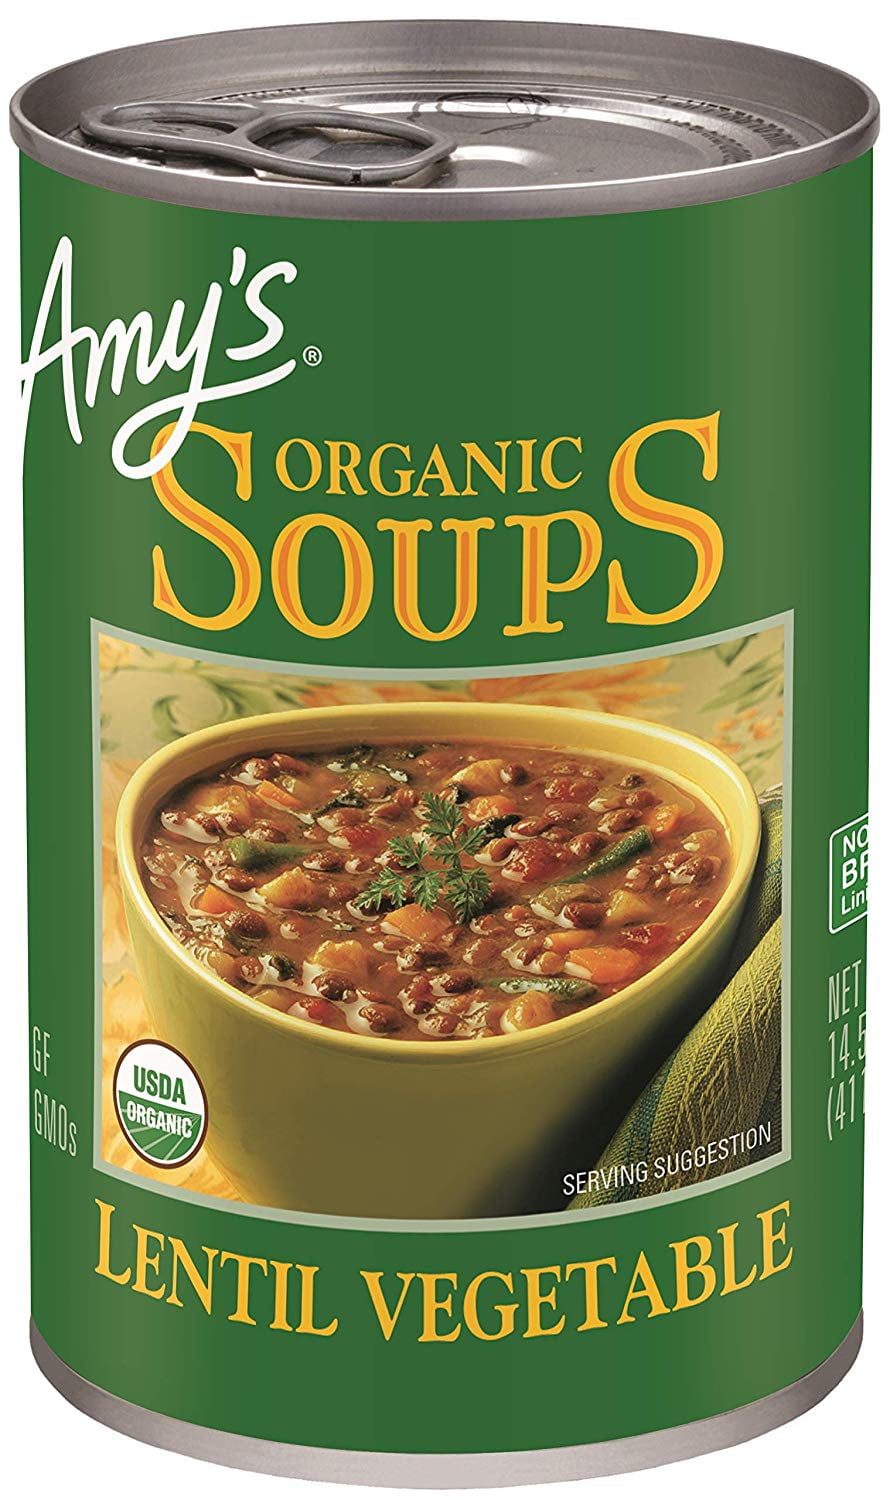 Amy's Organic Soups Reviews & Info (Dairy-Free & Vegan Varieties)